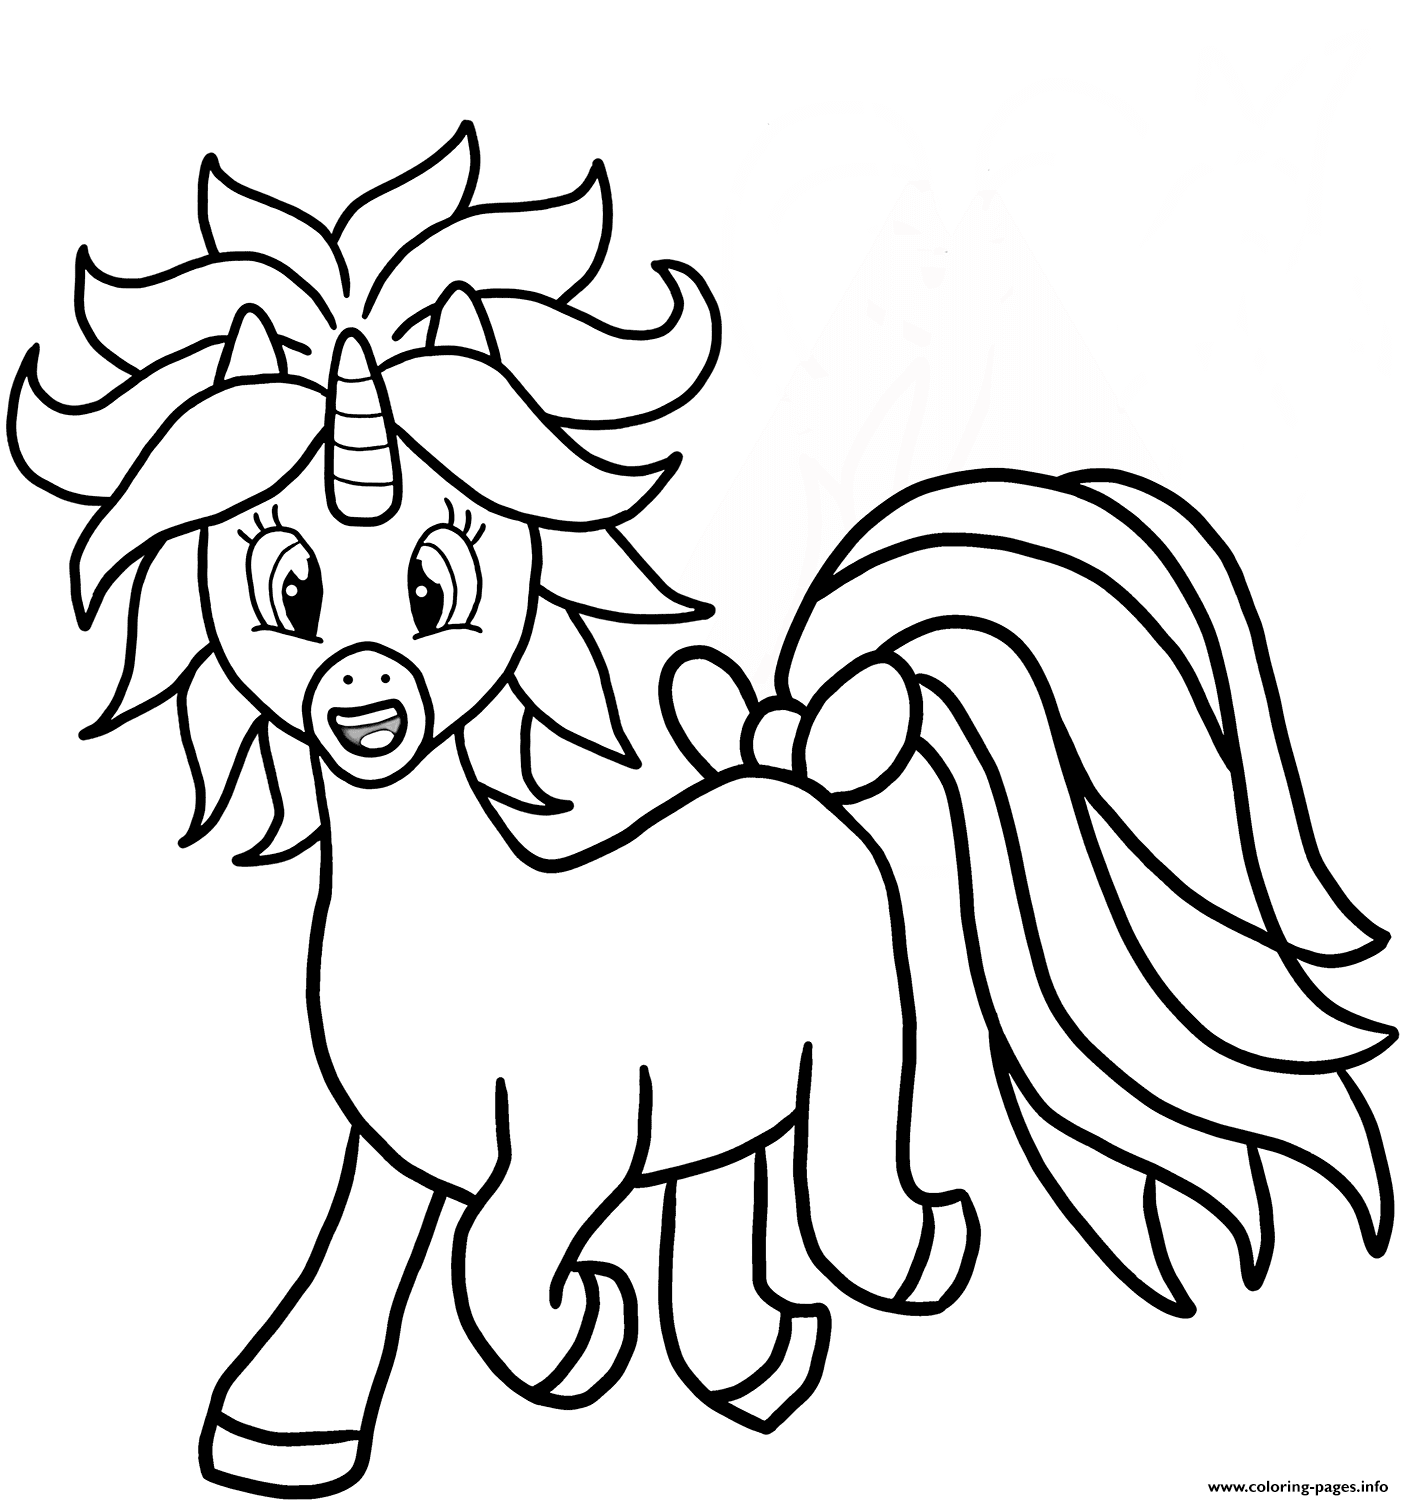 Cartoon Unicorn coloring